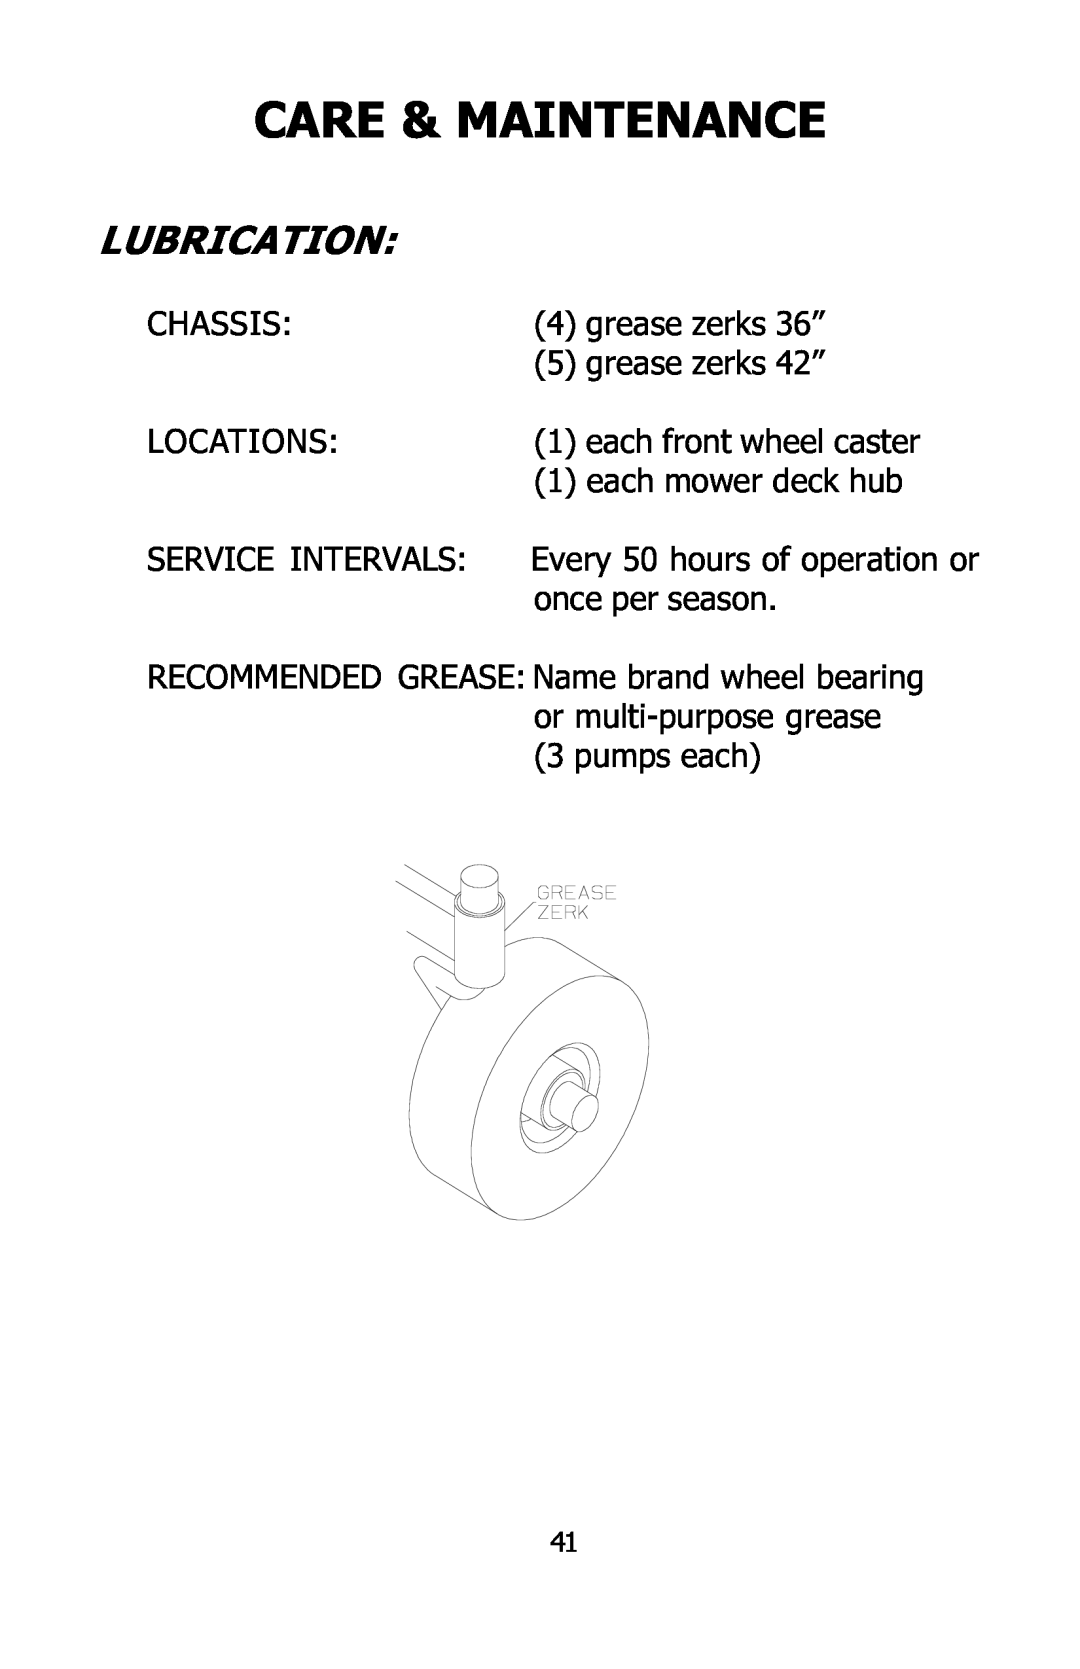 Dixon 16134-0803 manual Care & Maintenance, Lubrication 